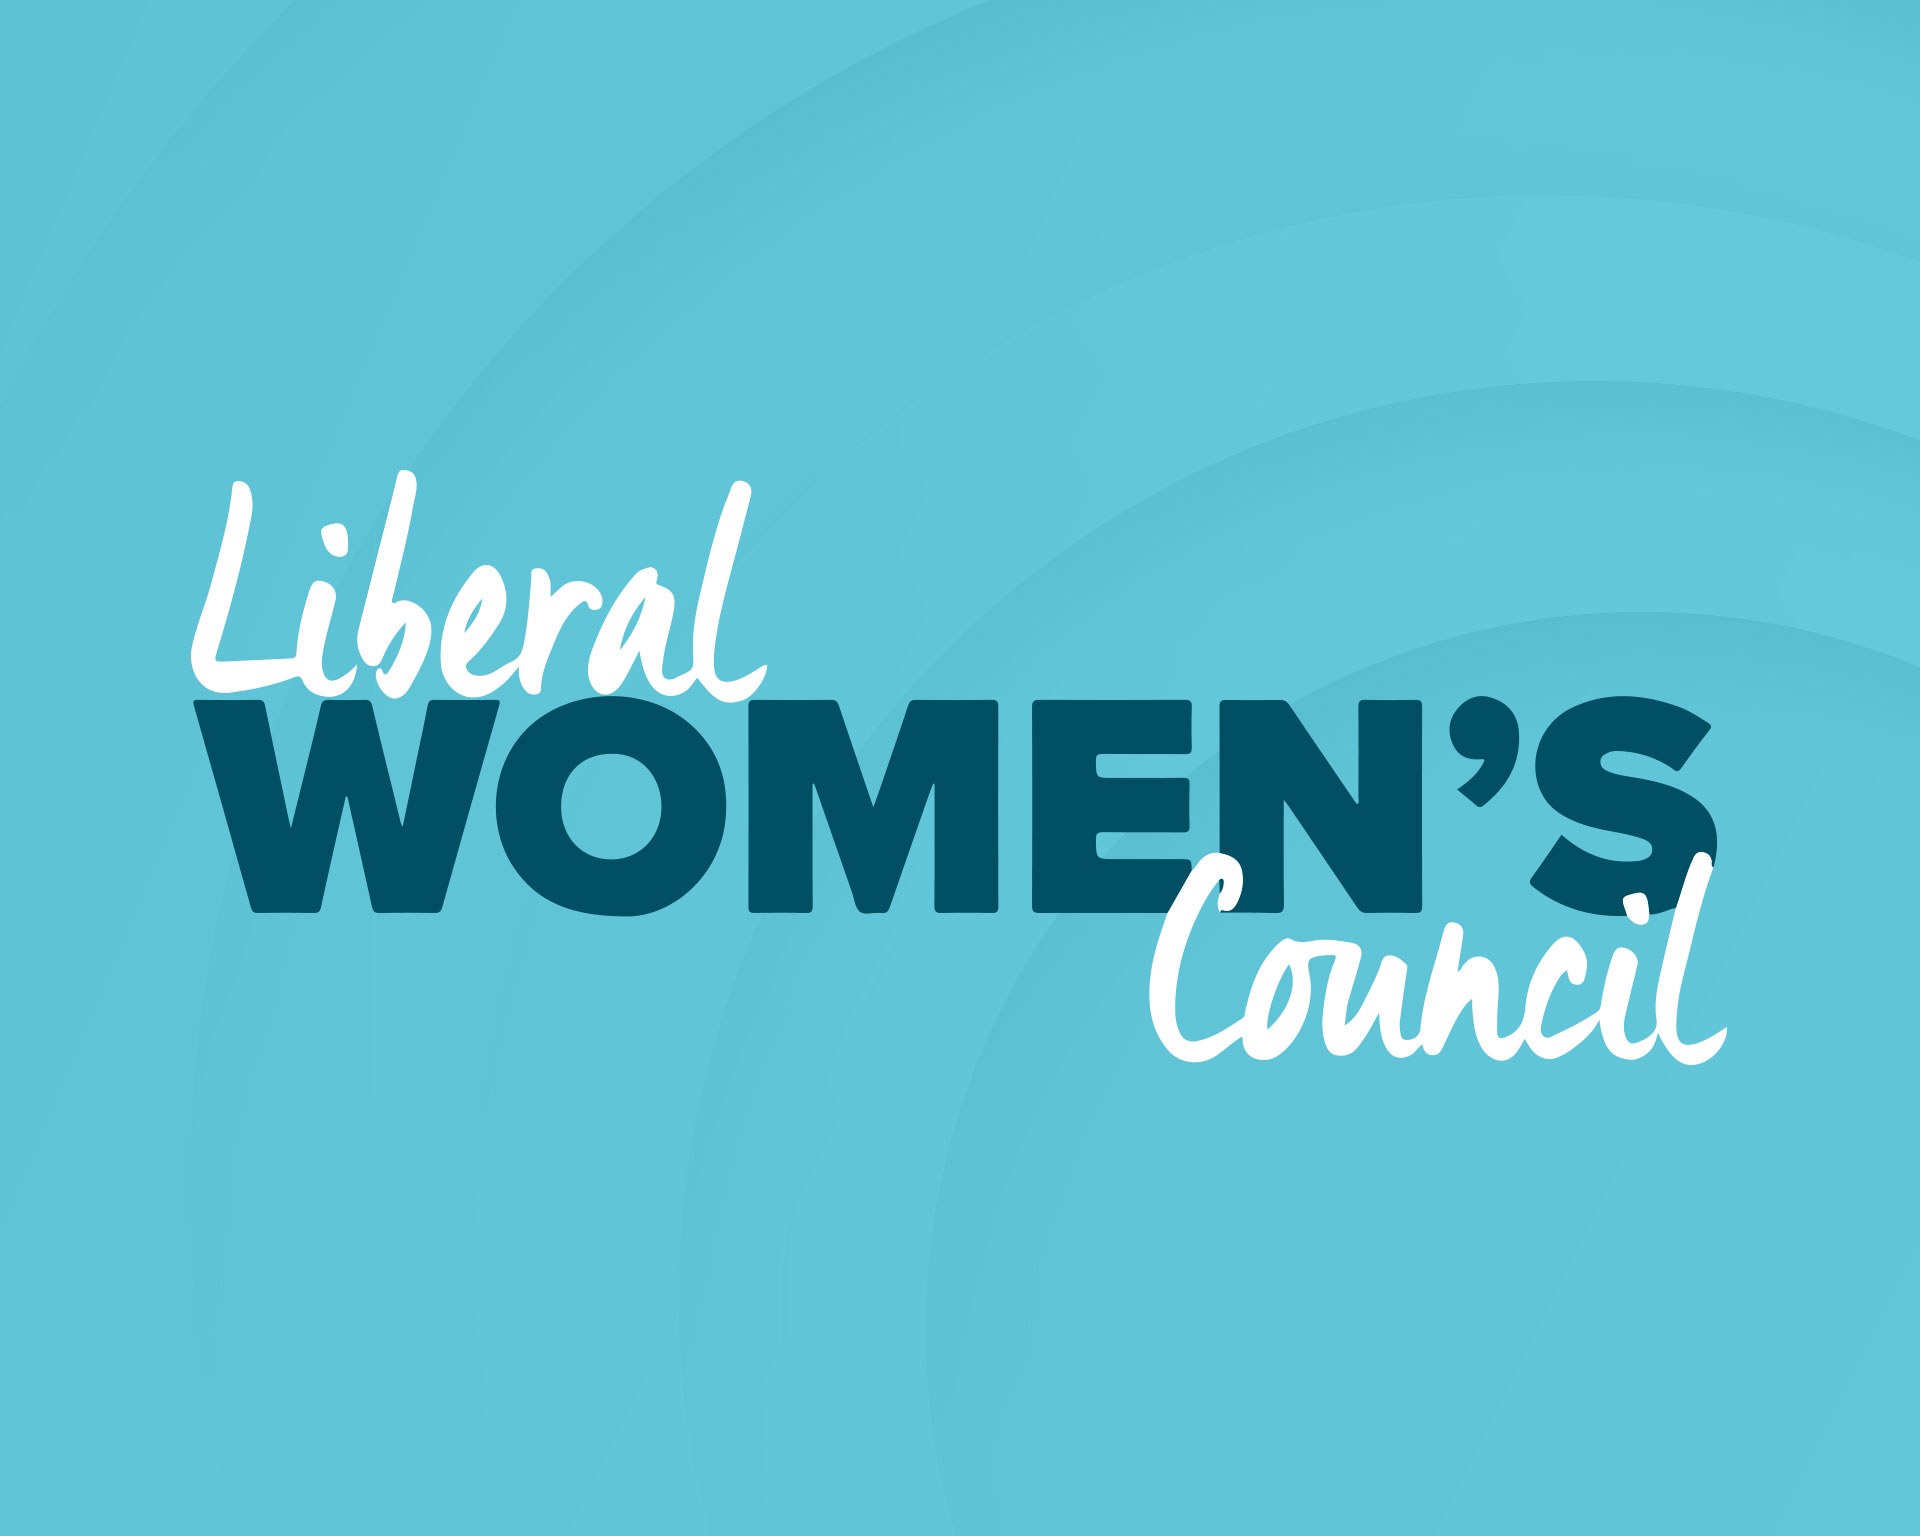 Liberal Women's Council Raffle